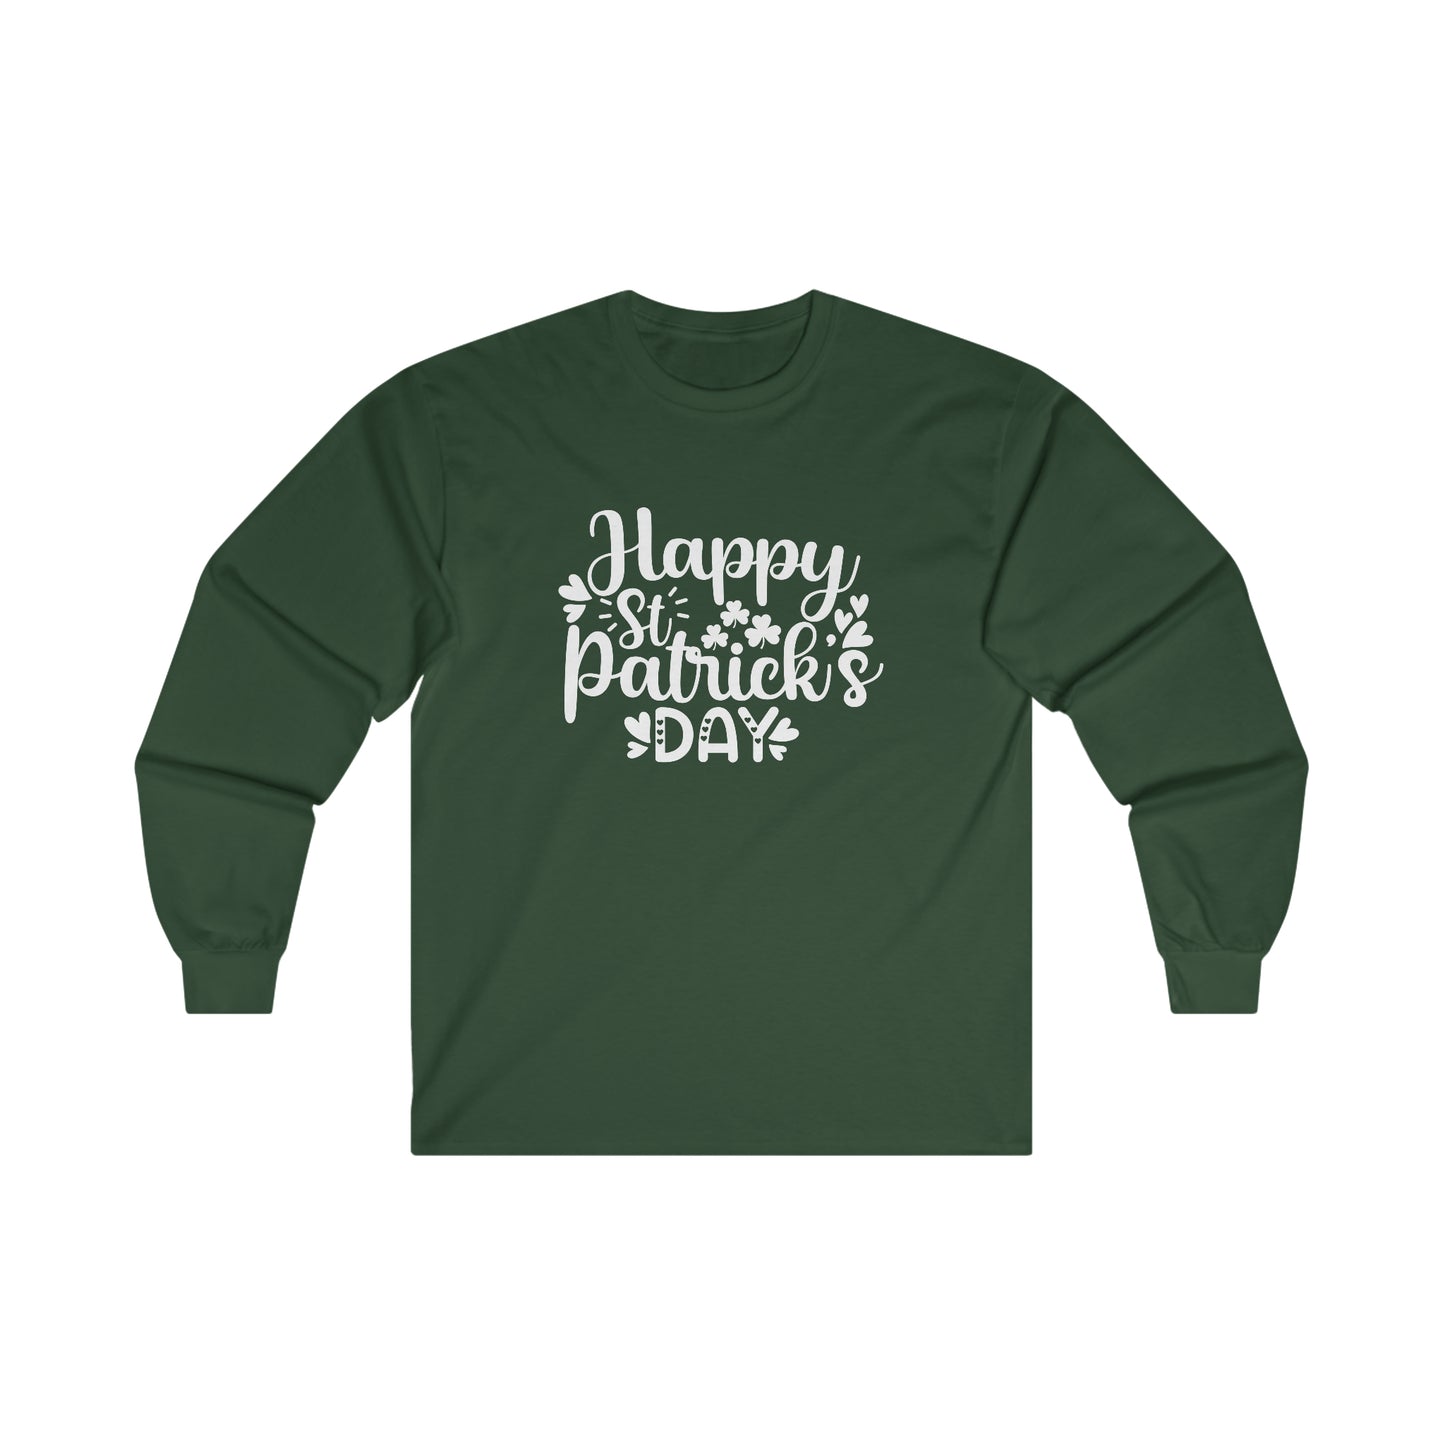 St. Patrick's Day Long Sleeve Shirt